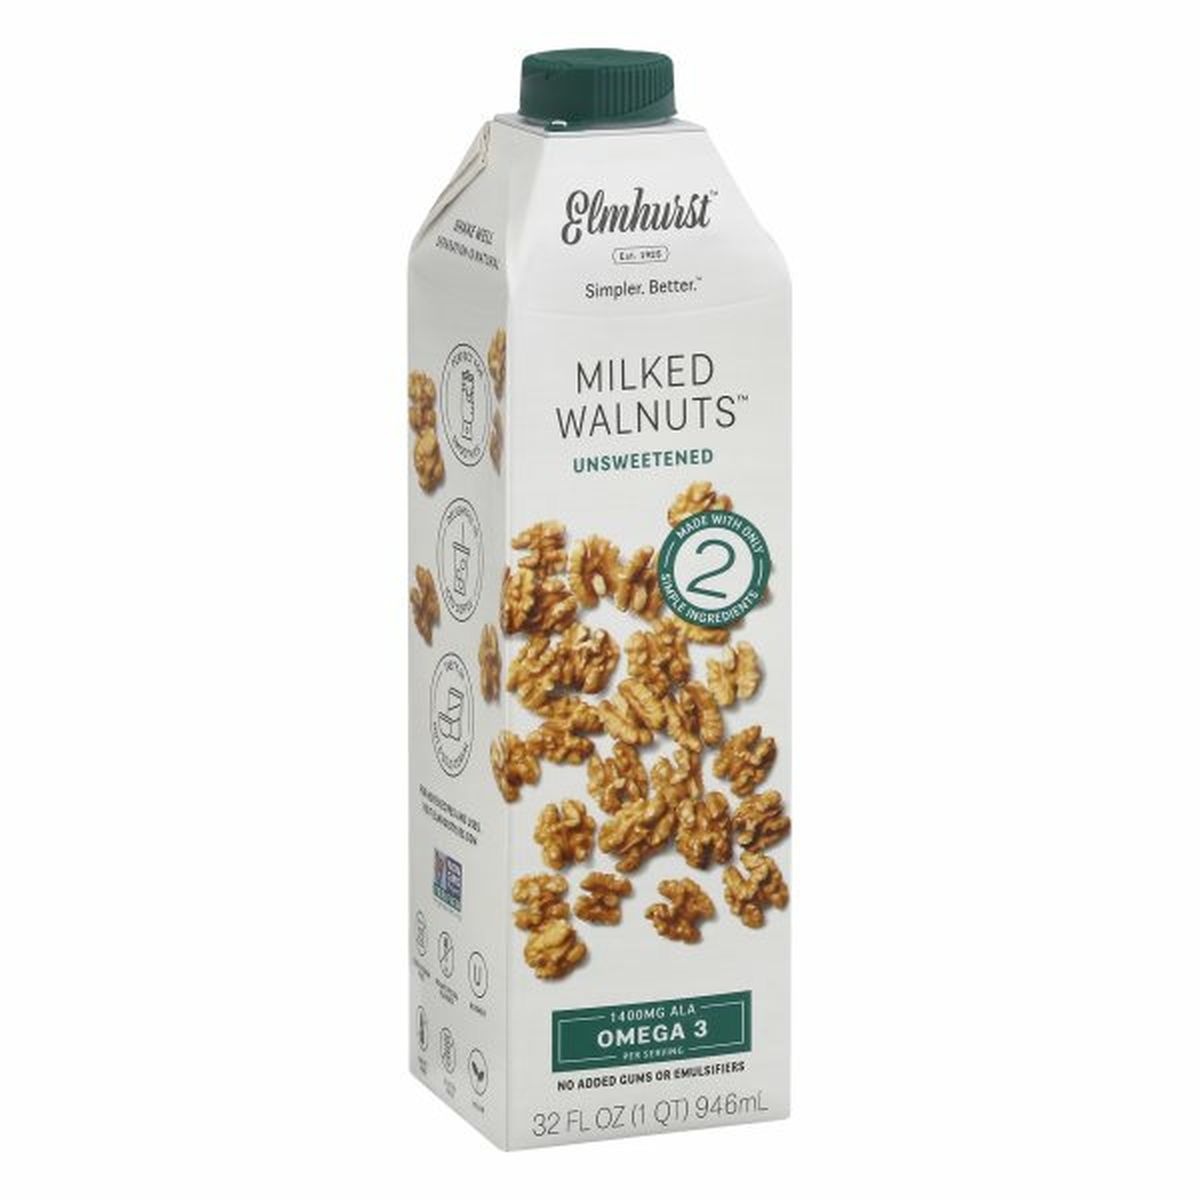 Calories in Elmhurst Milked Walnuts, Unsweetened